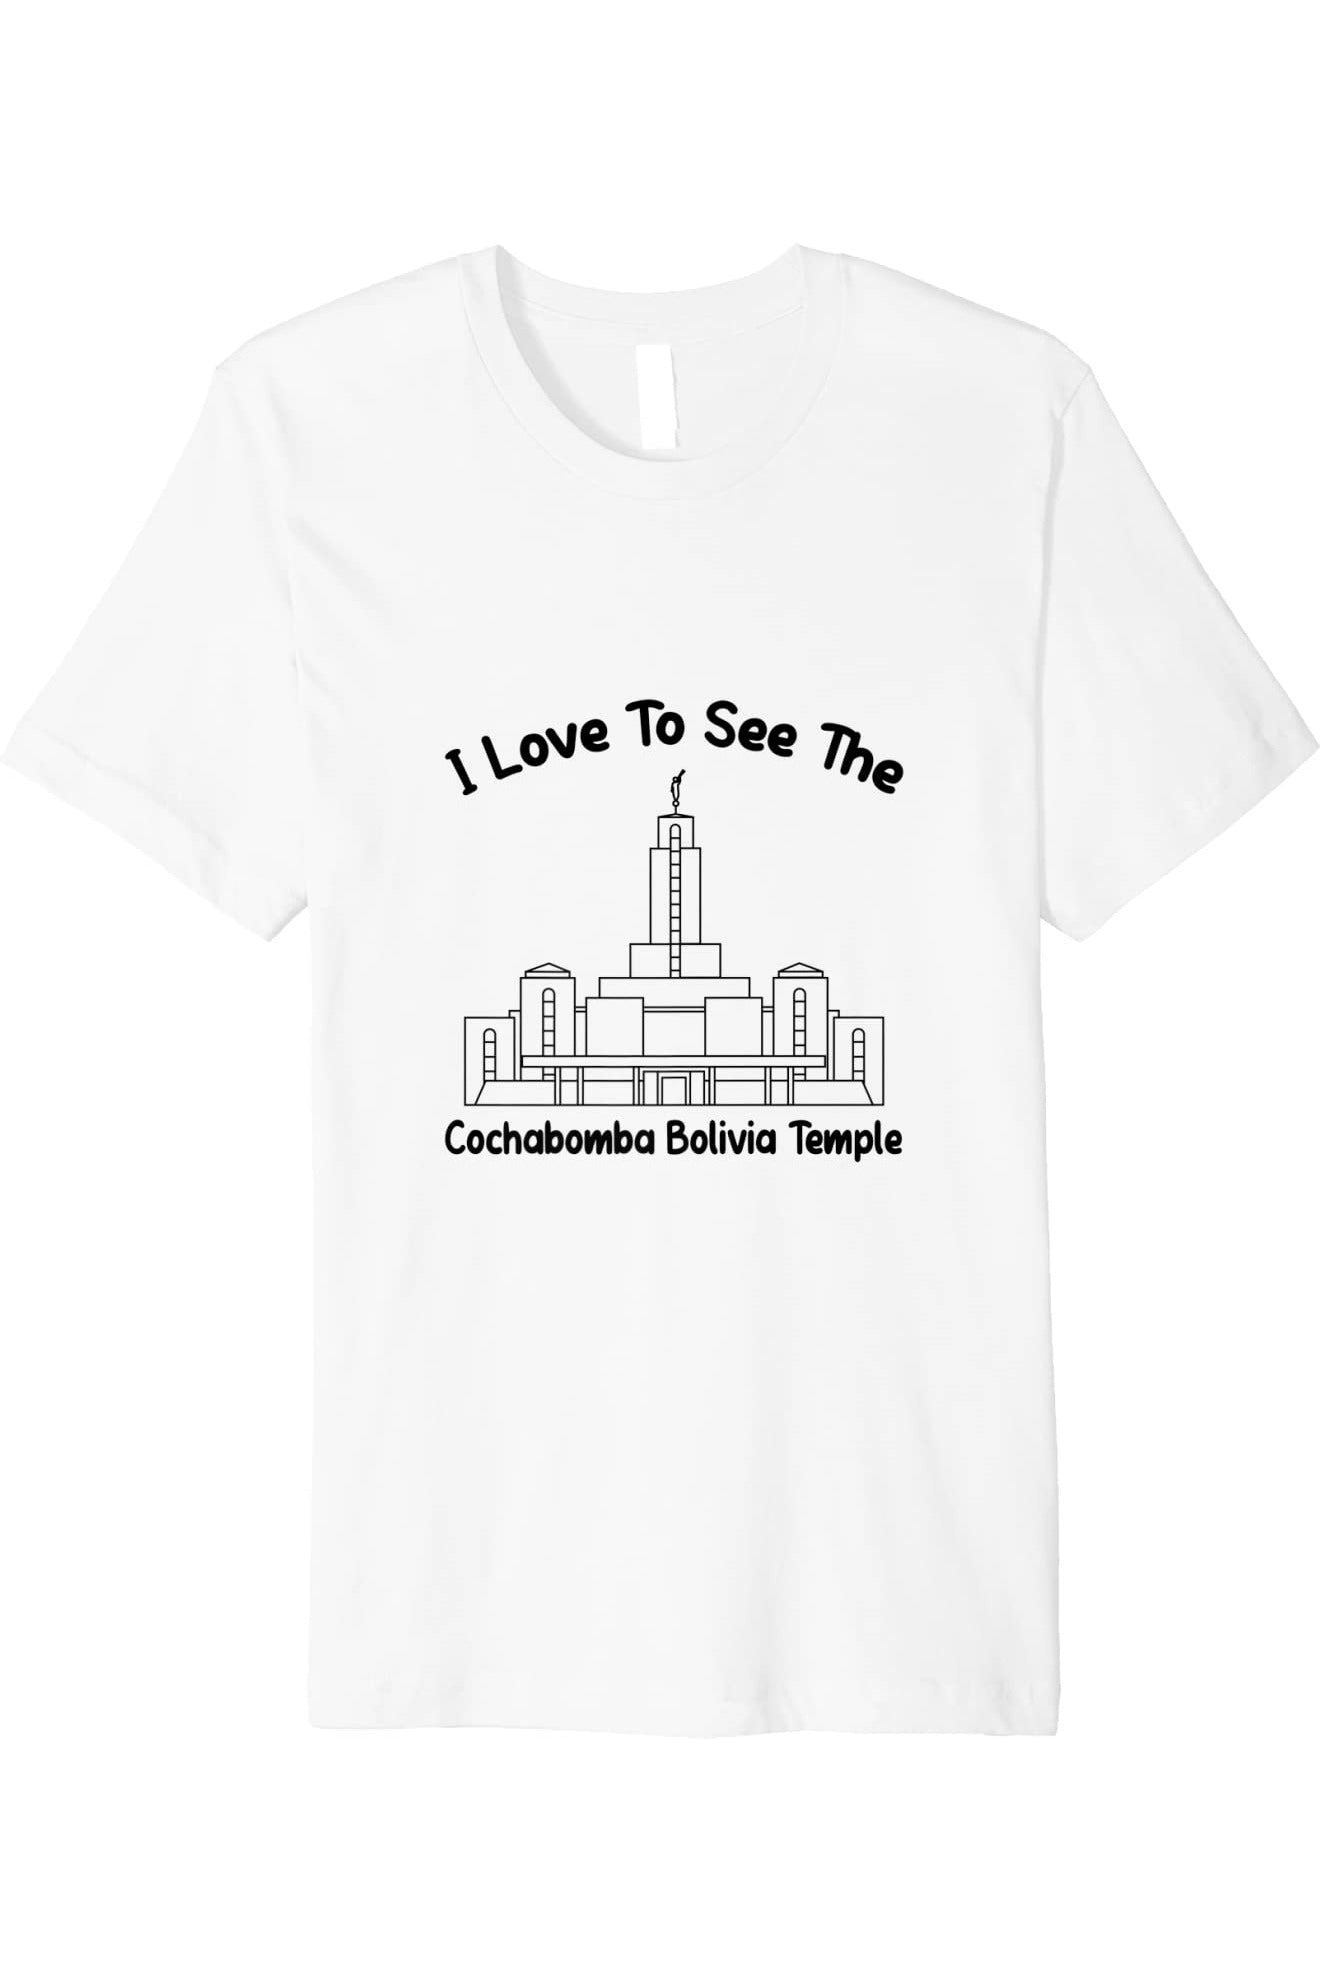 Cochabamba Bolivia Temple T-Shirt - Premium - Primary Style (English) US